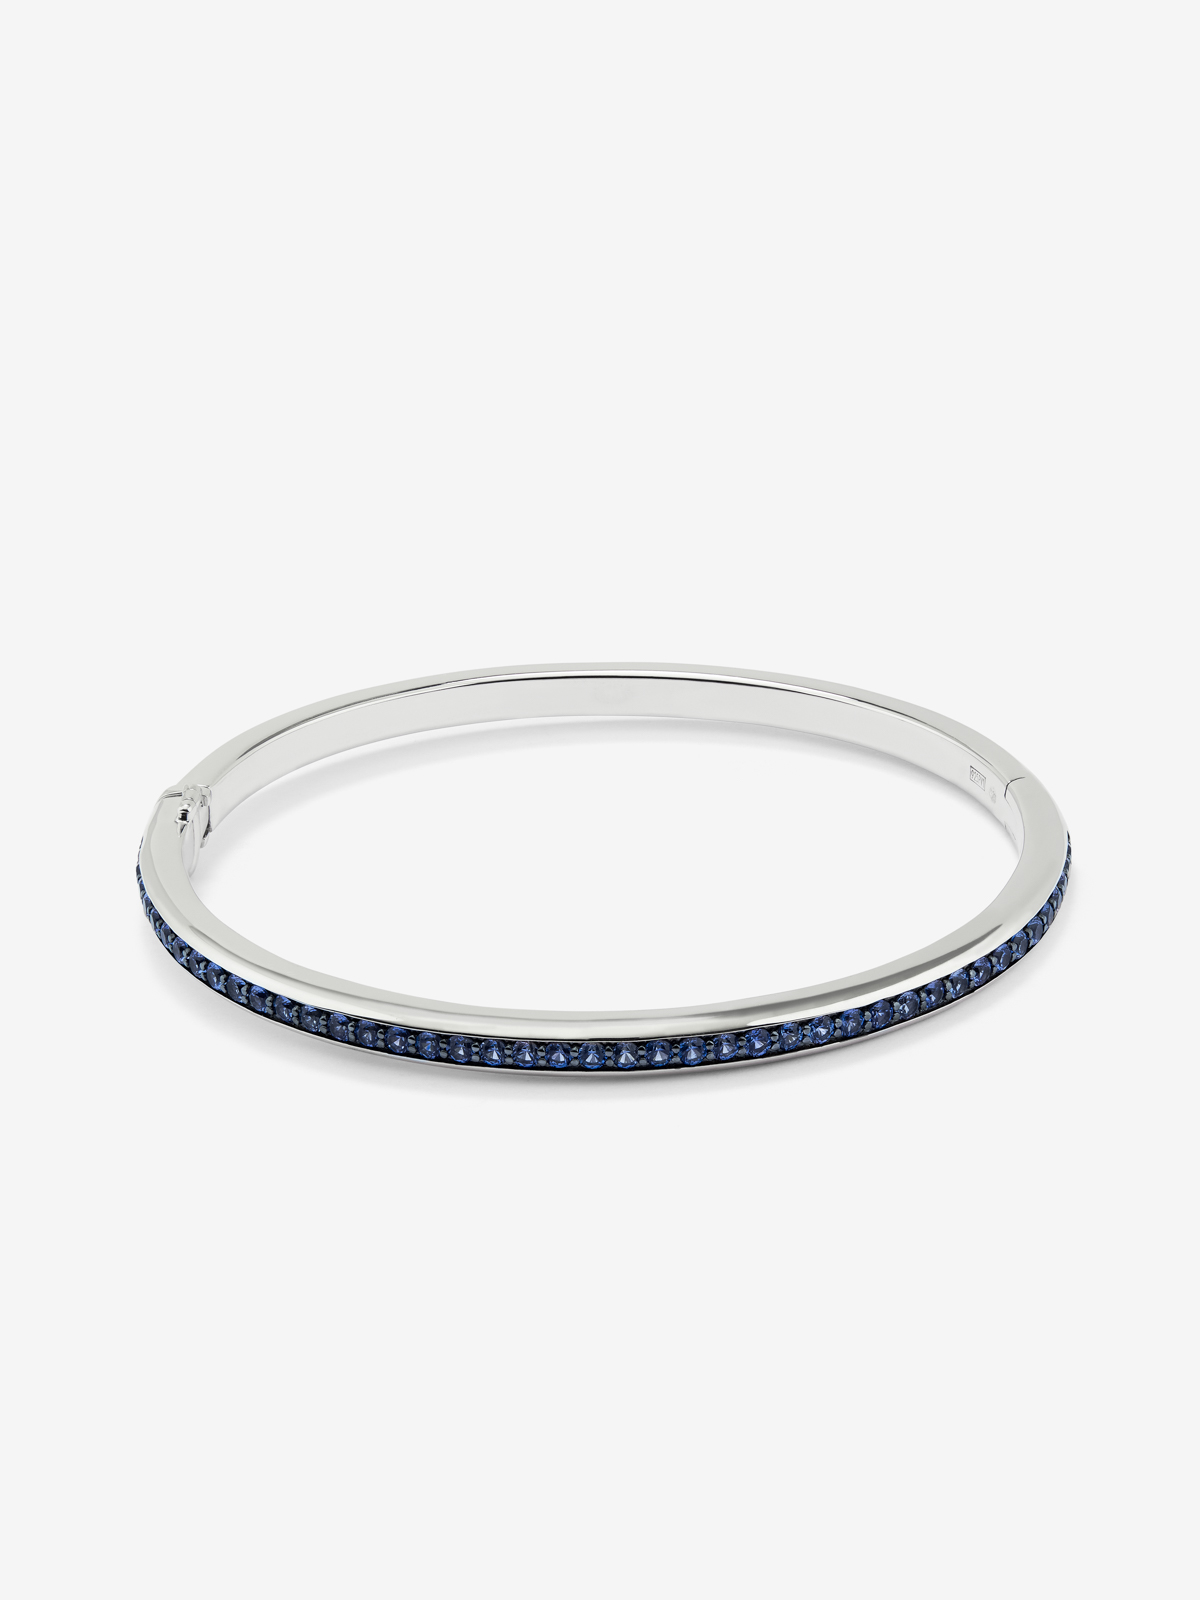 925 Silver rigid bracelet with sapphires.